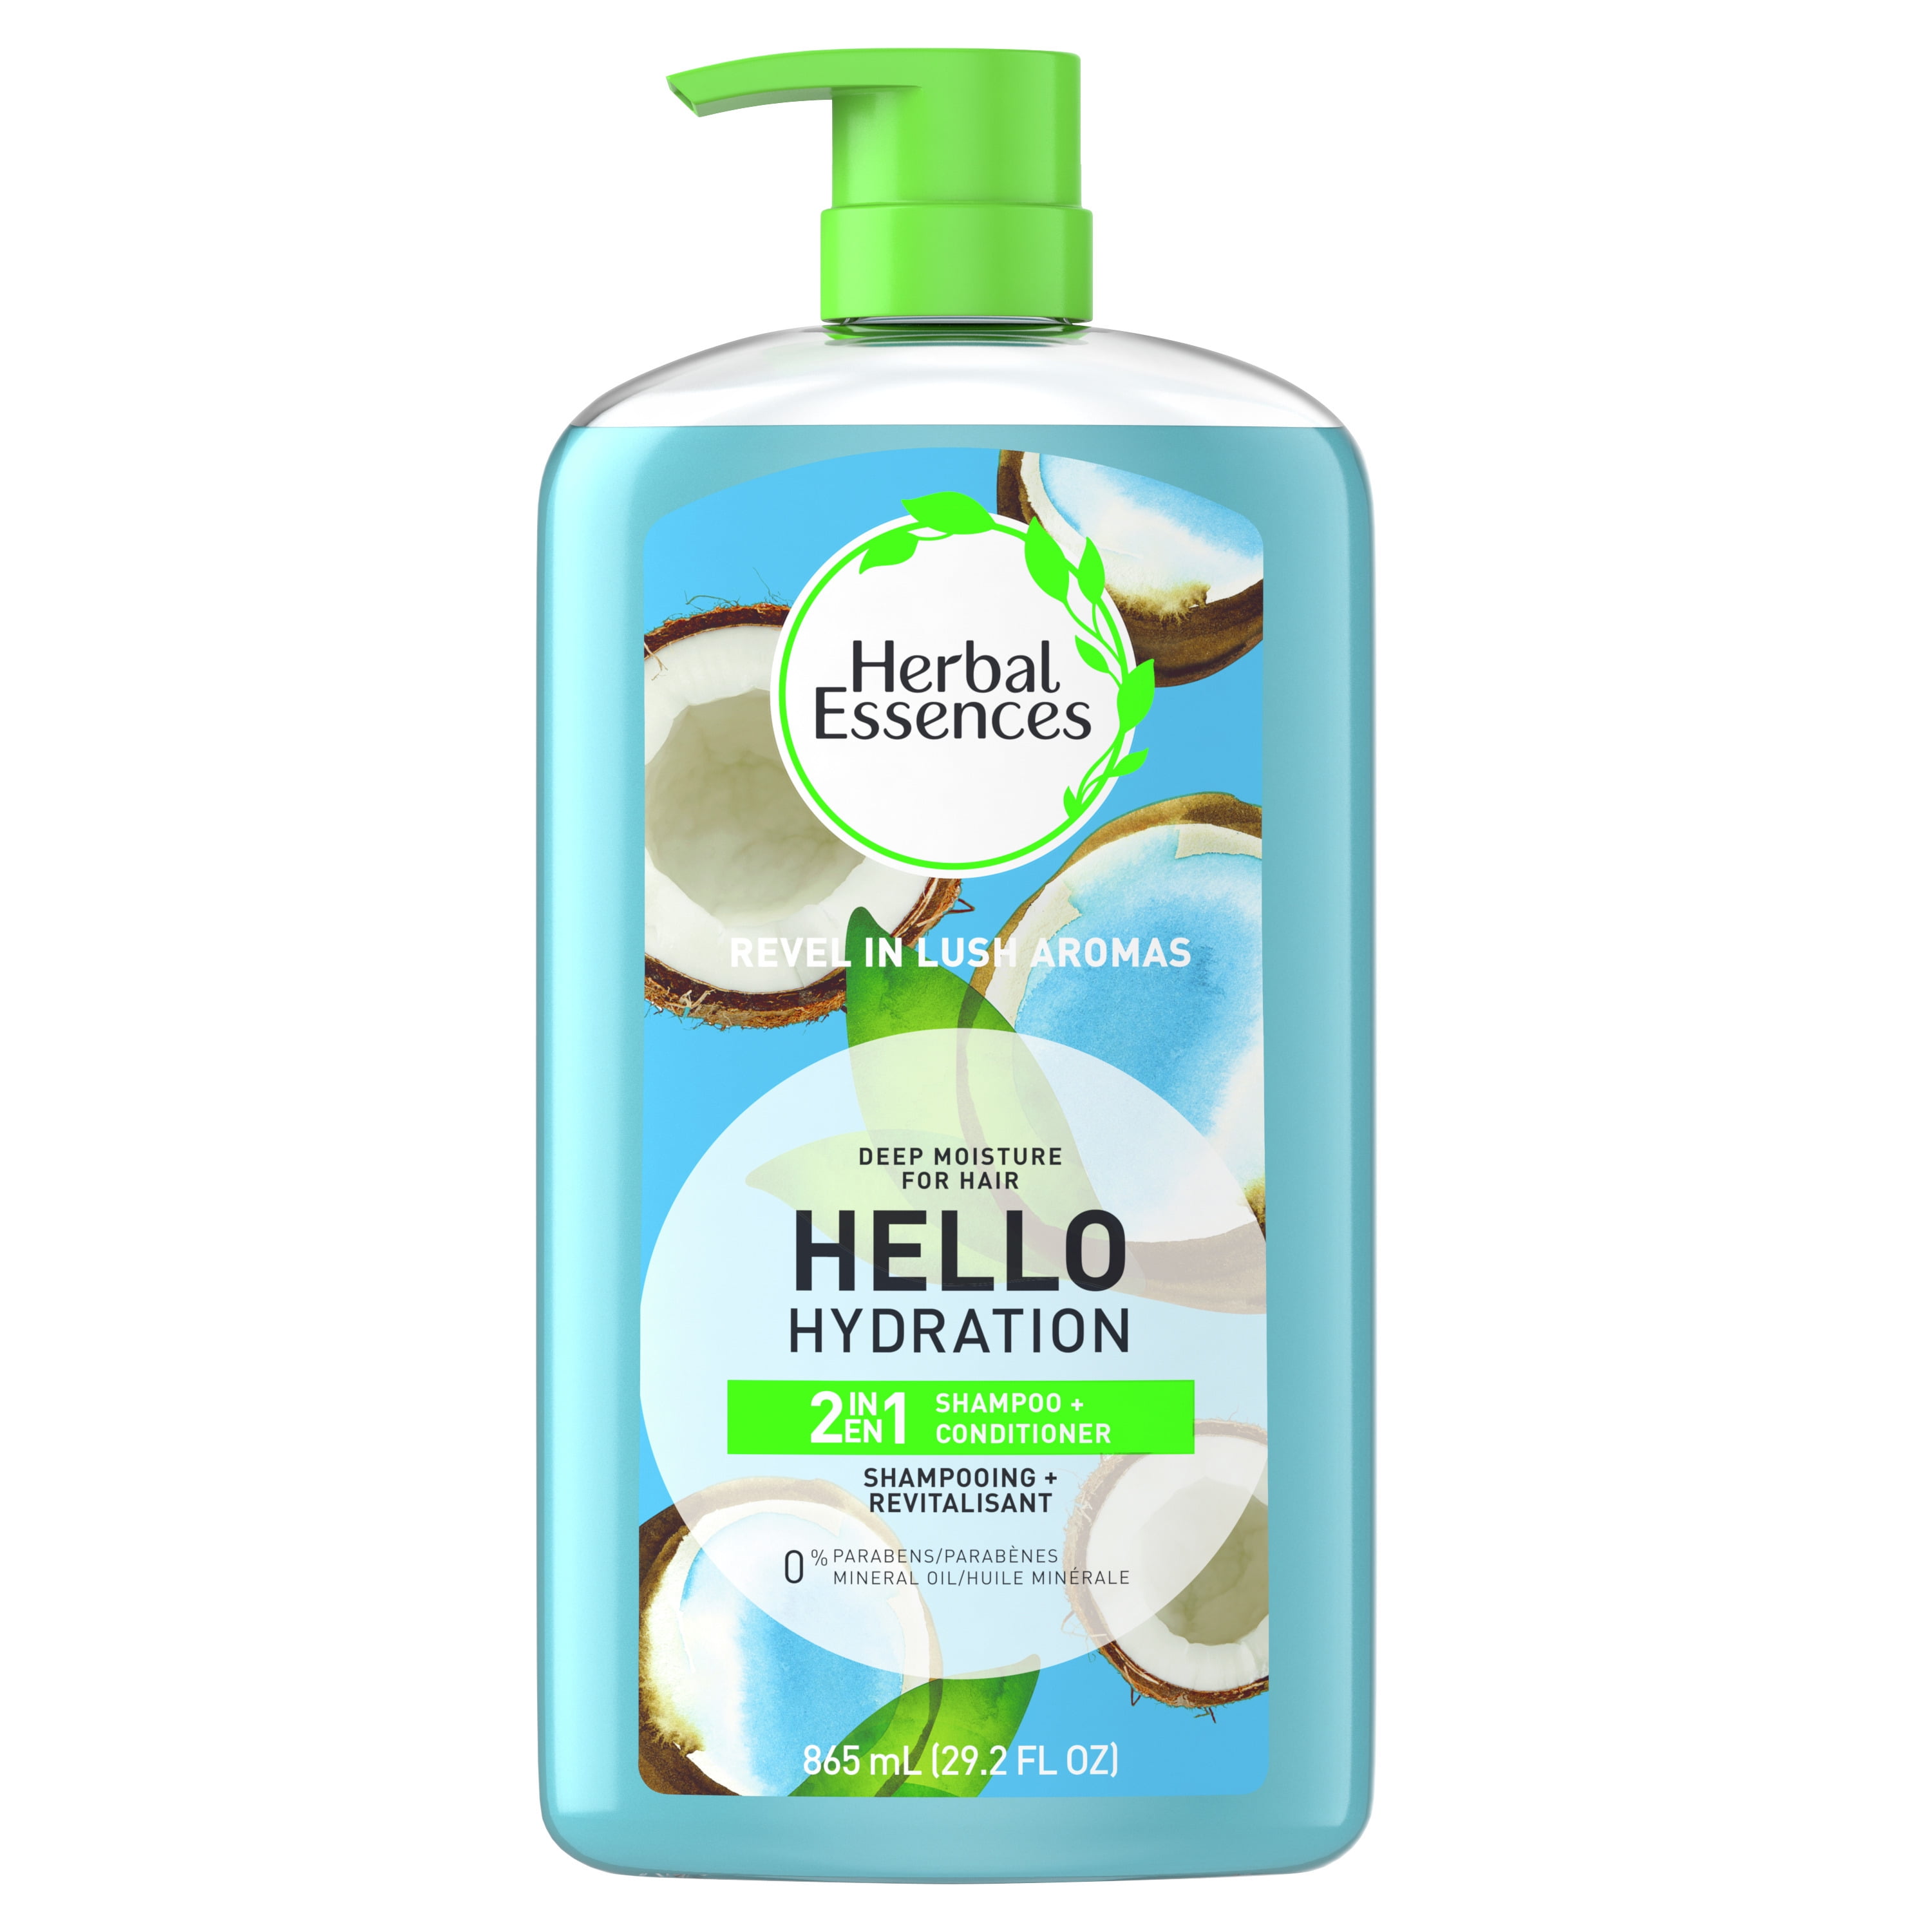 Herbal Essences Hello Hydration 2IN1 Shampoo Conditioner, Moisture for Hair 29.2 fl - Walmart.com